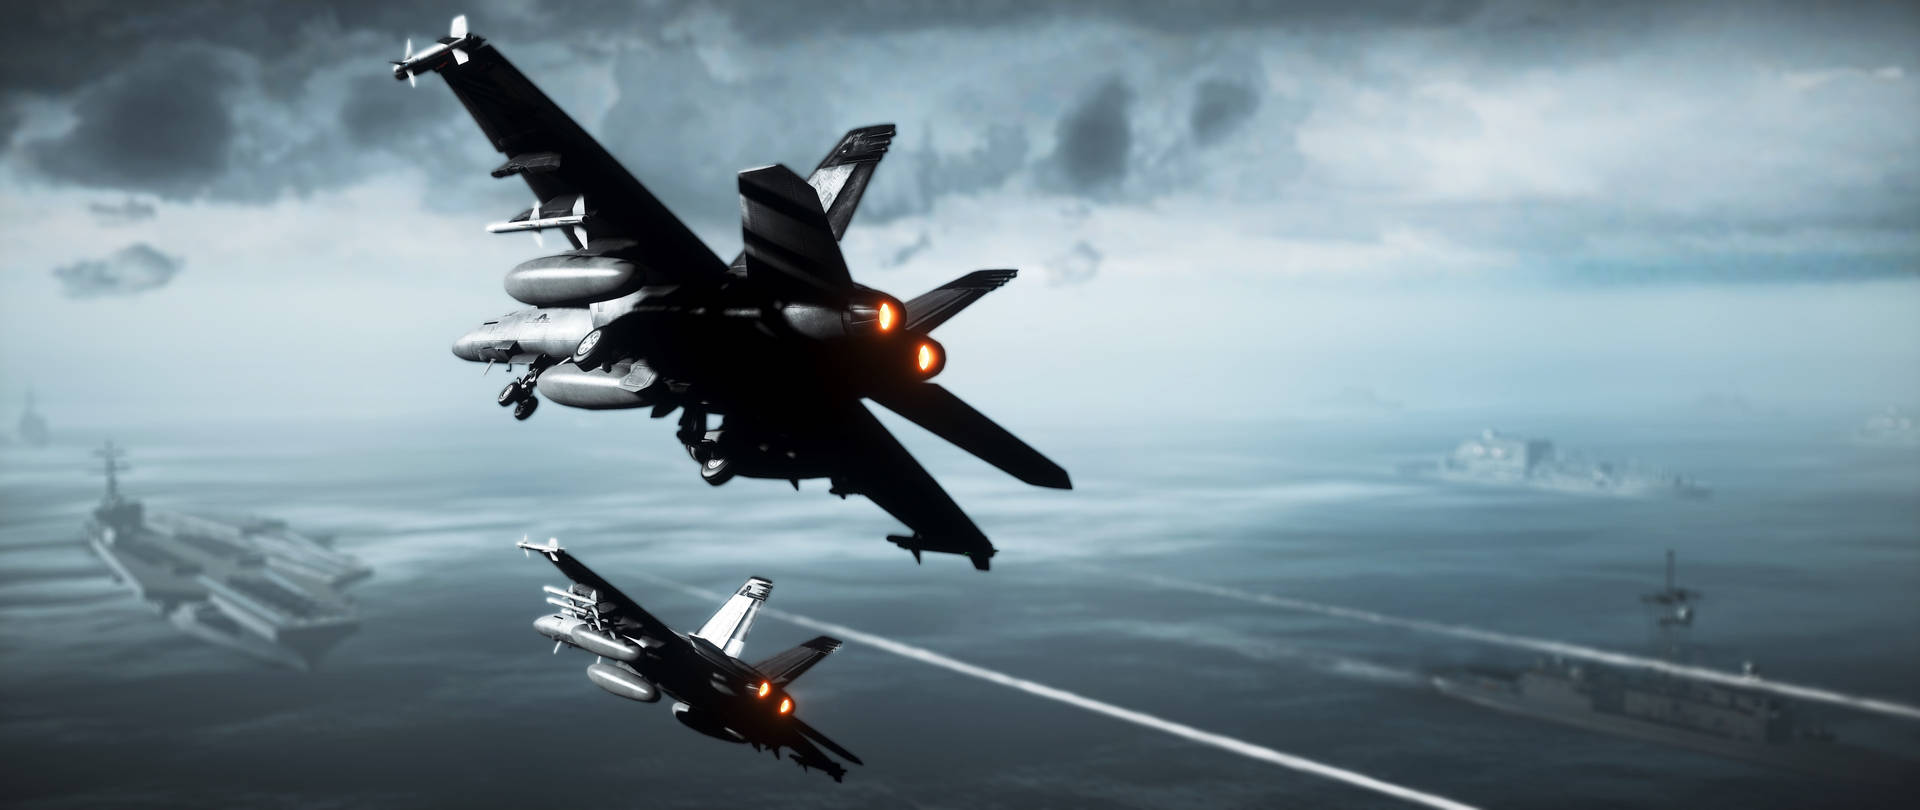 Cool Battlefield 3 Flying Fighter Jets Wallpaper